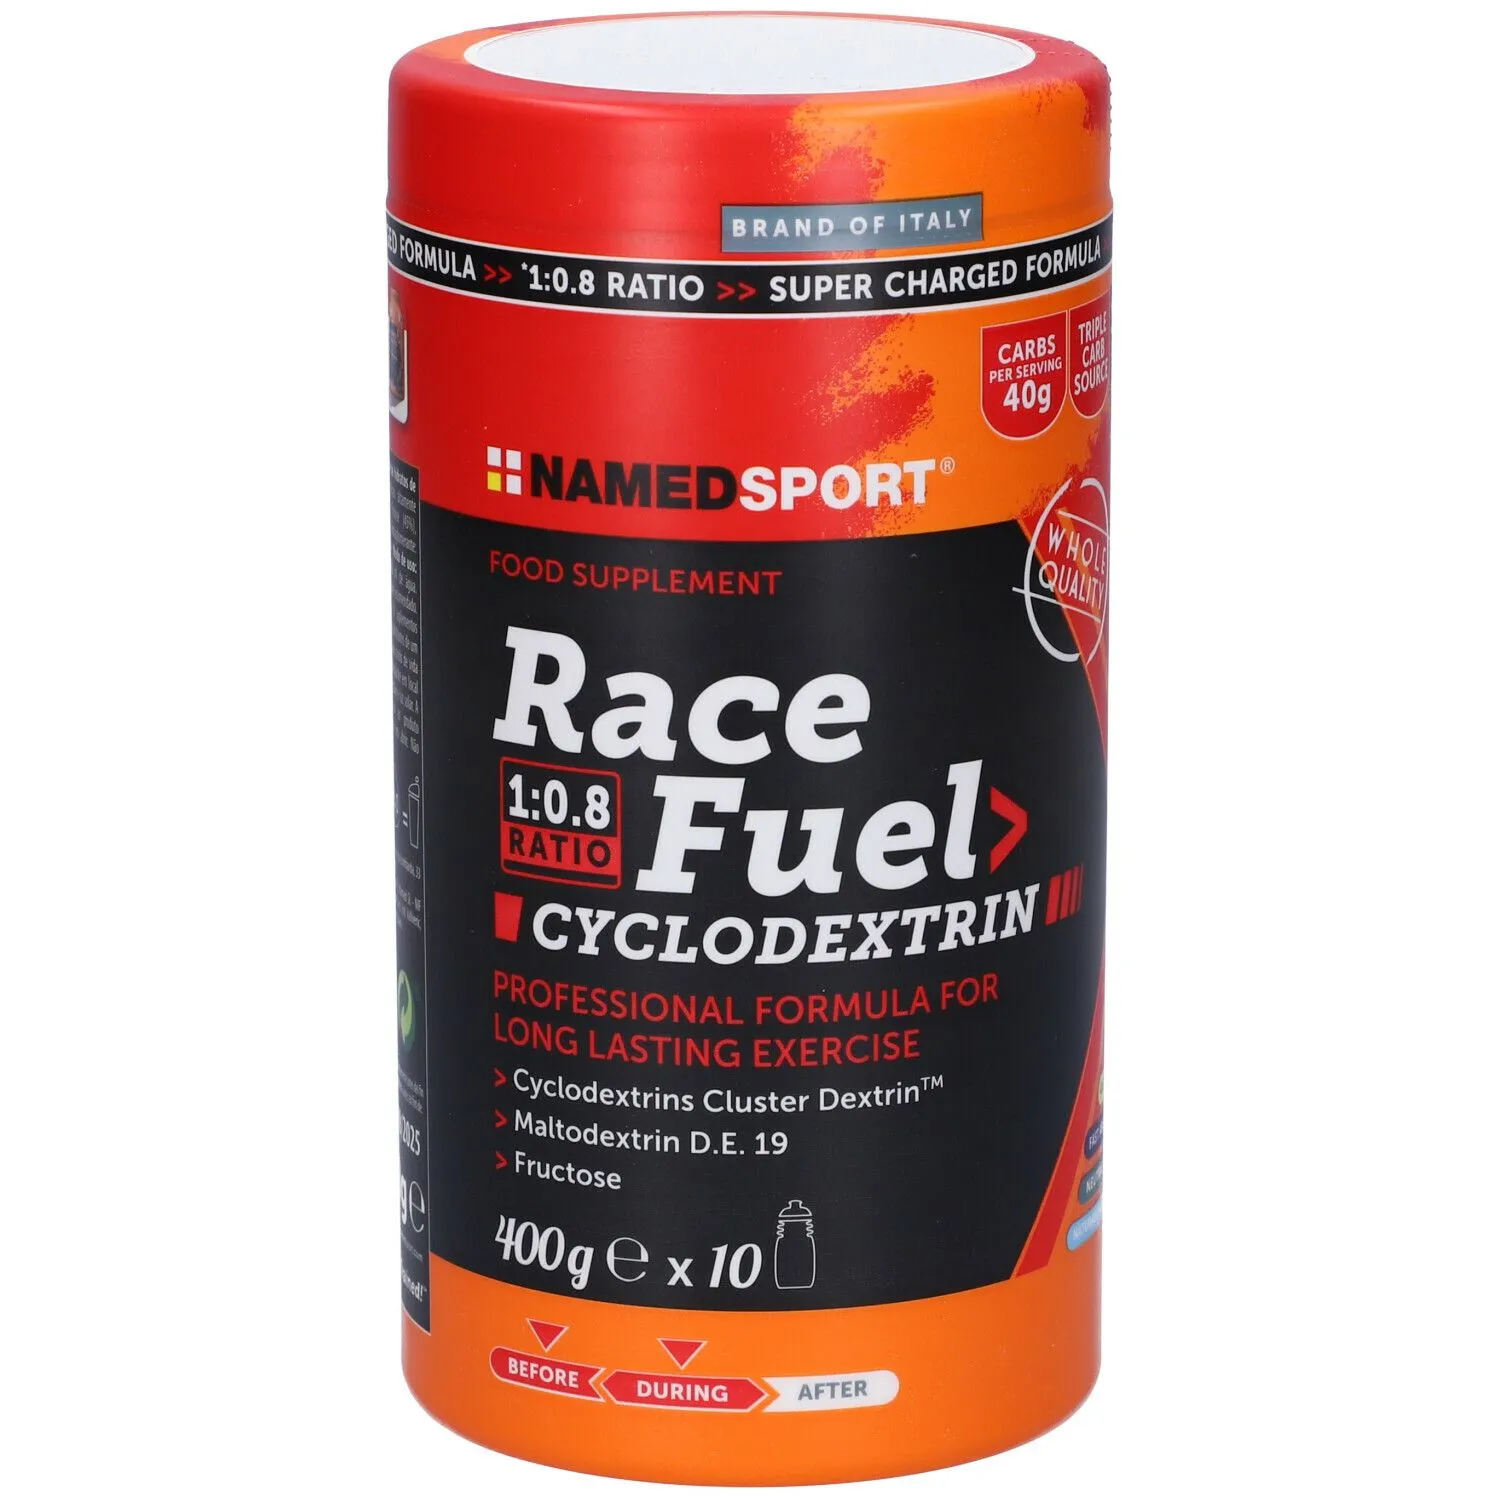 NAMED SPORT® Race Fuel Cyclodextrin